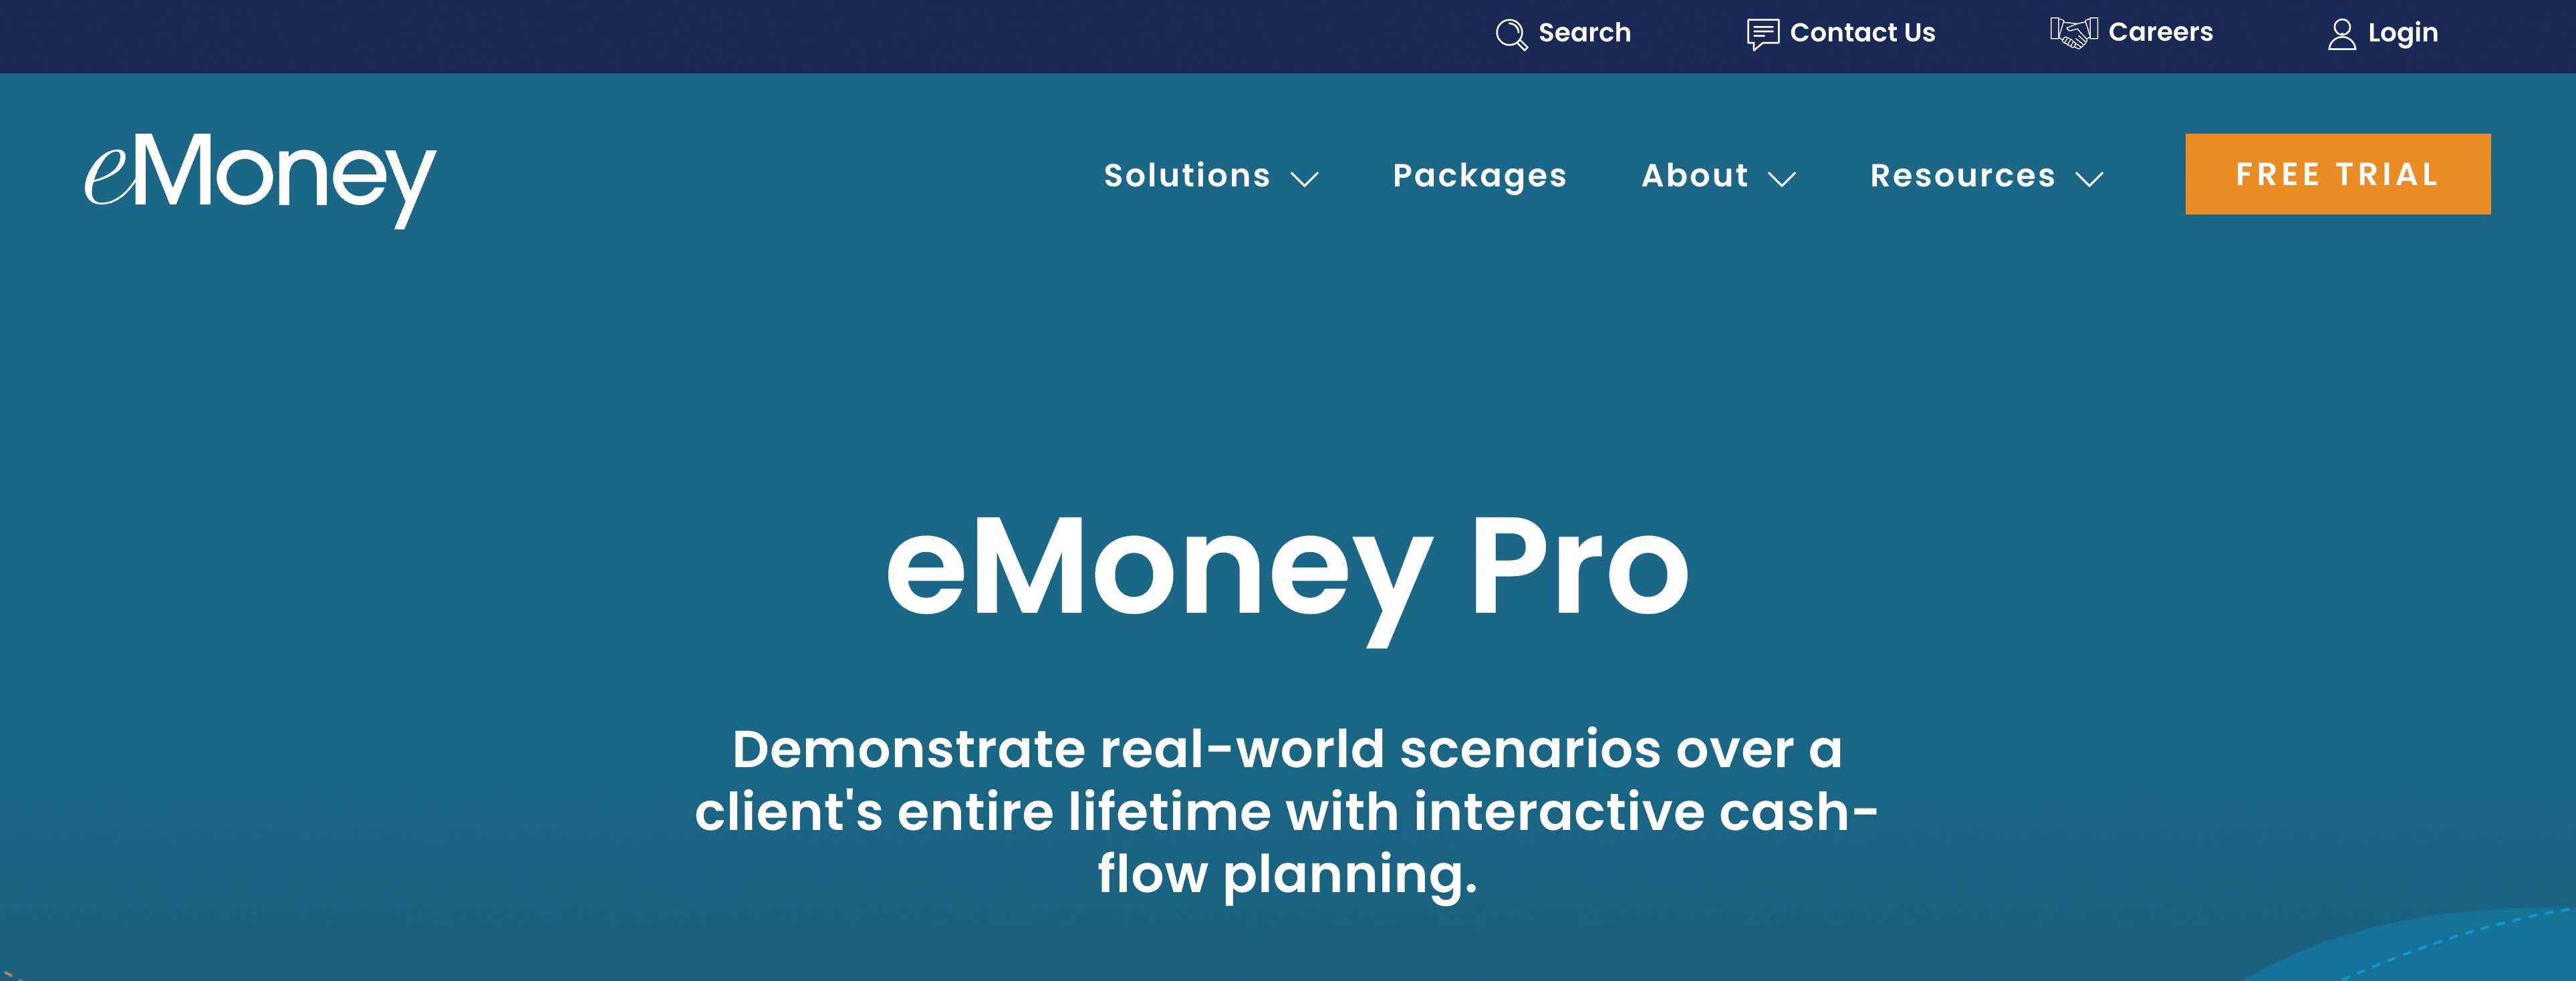 eMoney Pro